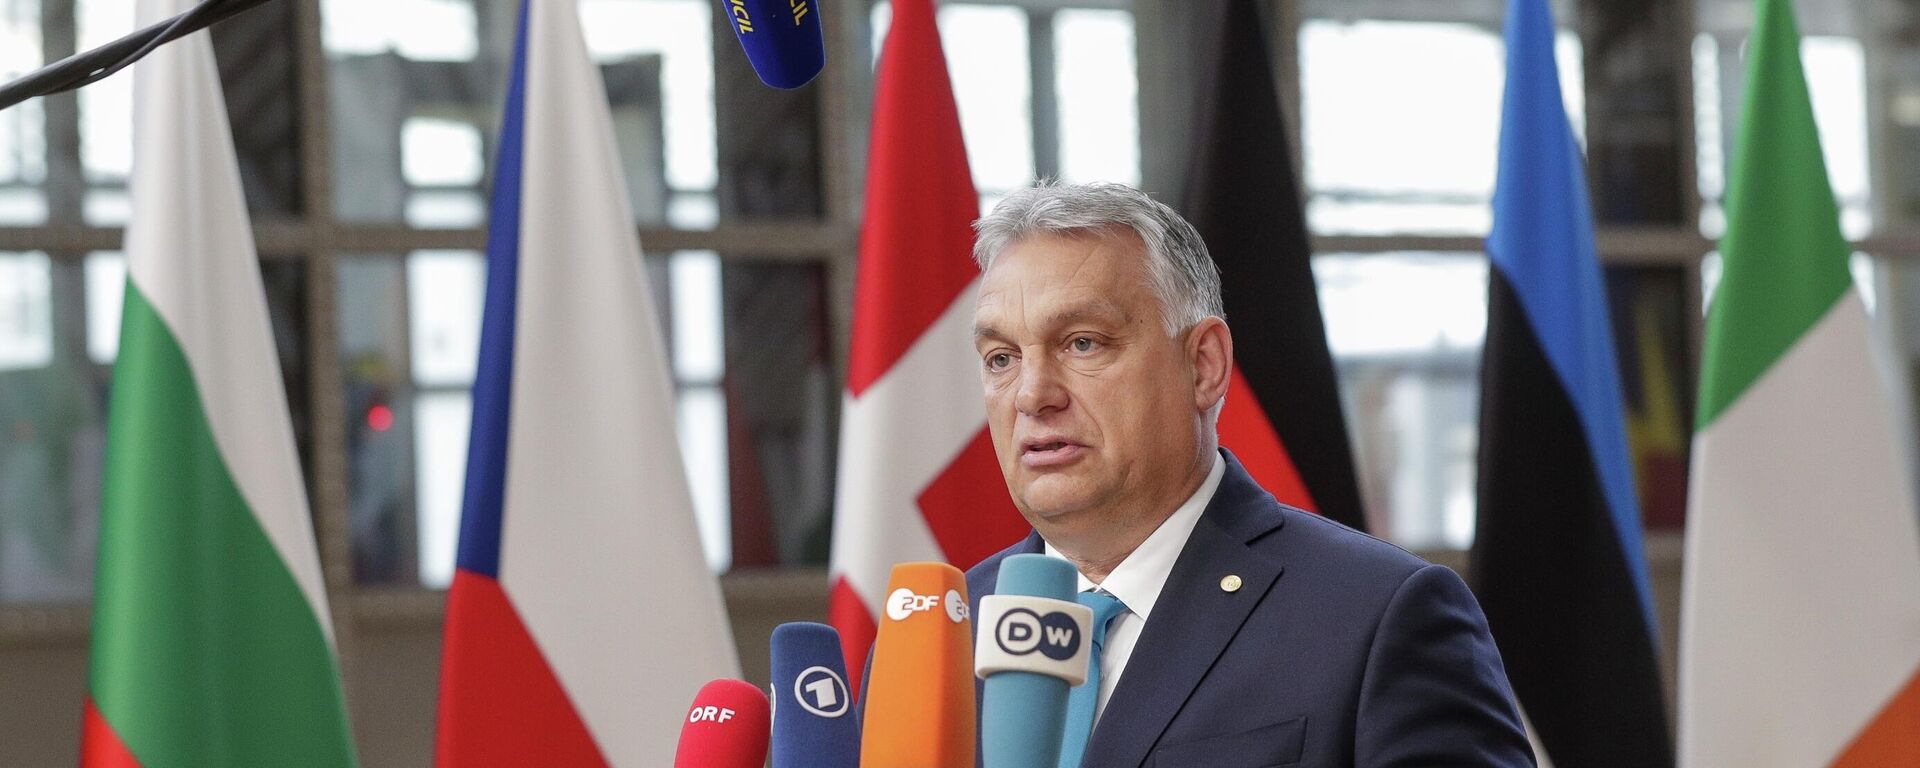 Hungary's Prime Minister Viktor Orban talks to journalists as he arrives for an EU summit in Brussels, Thursday, Oct. 21, 2021. - Sputnik International, 1920, 07.05.2022